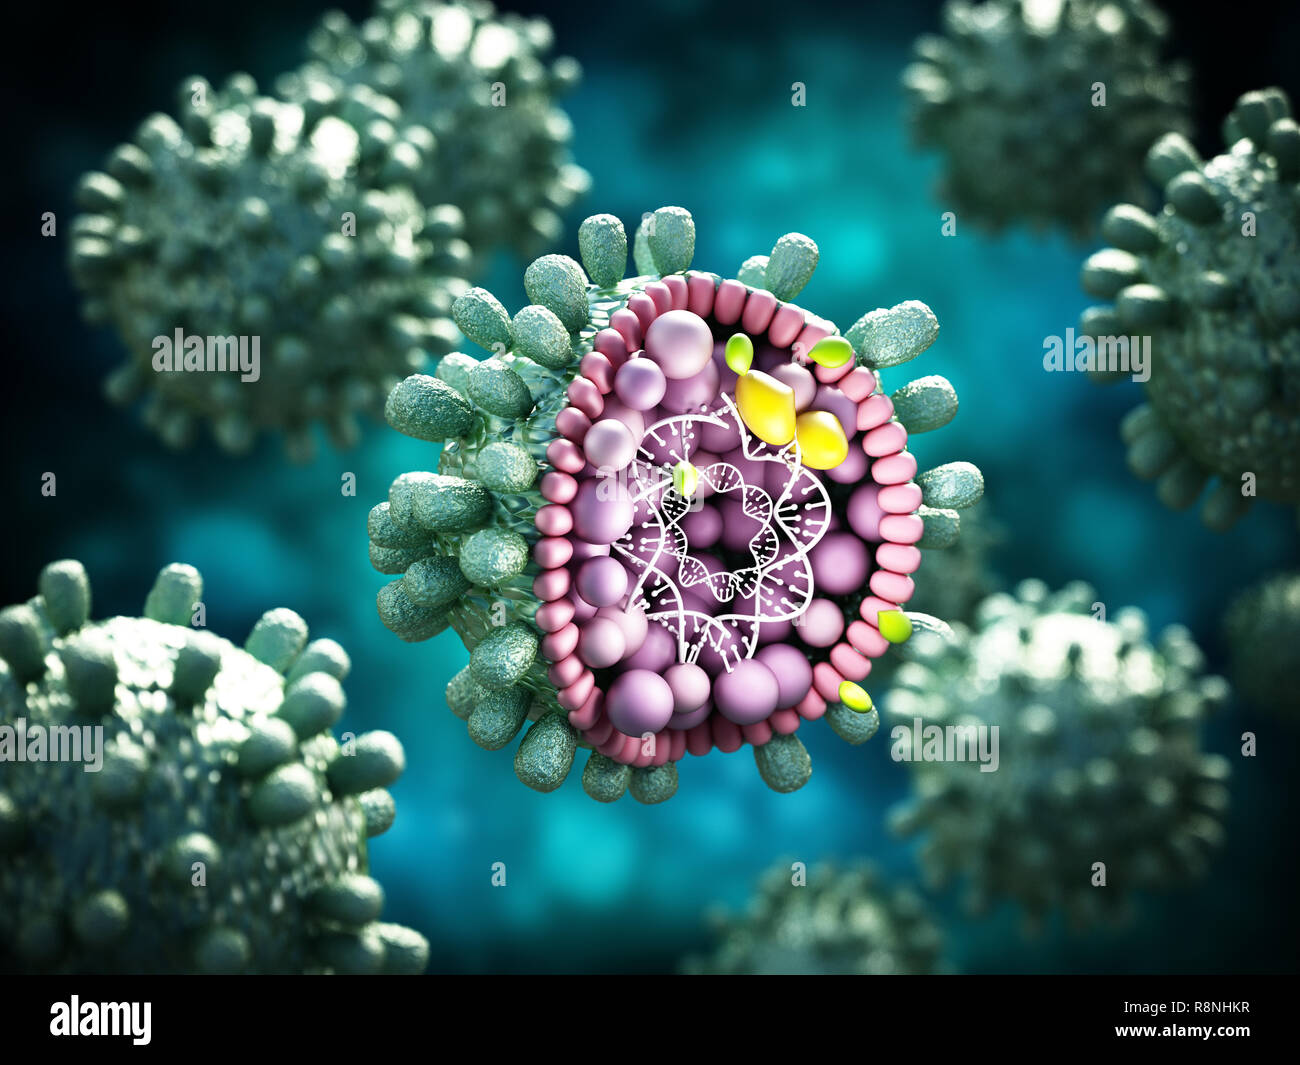 Structural detail of Hepatitis B virus on blue-green background. 3D illustration. Stock Photo